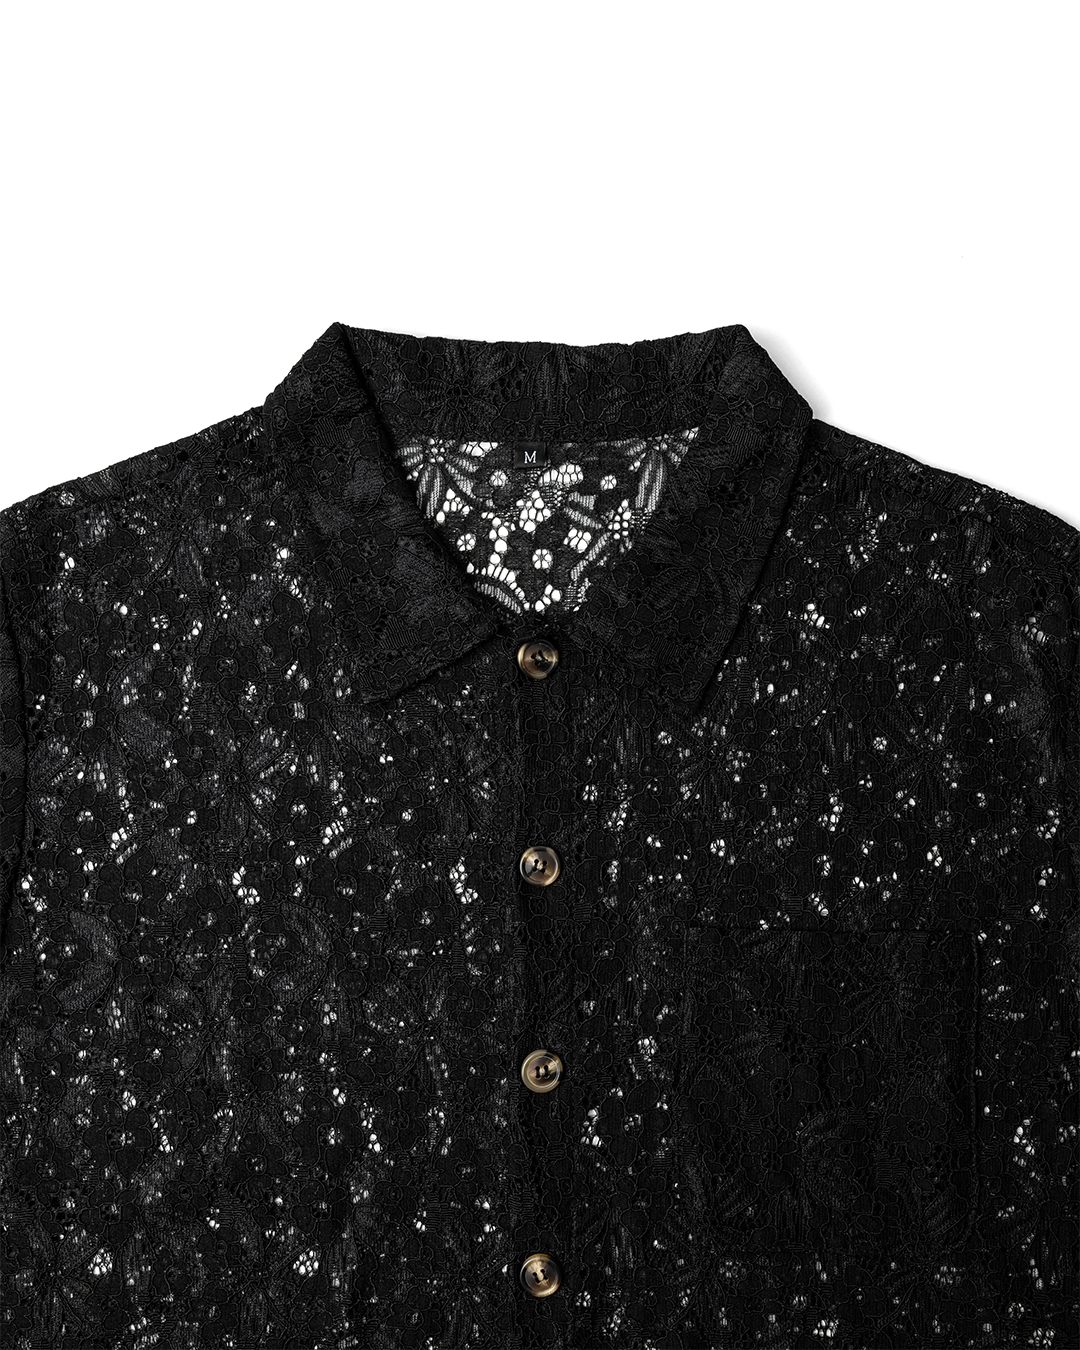 Black Lace Shirt